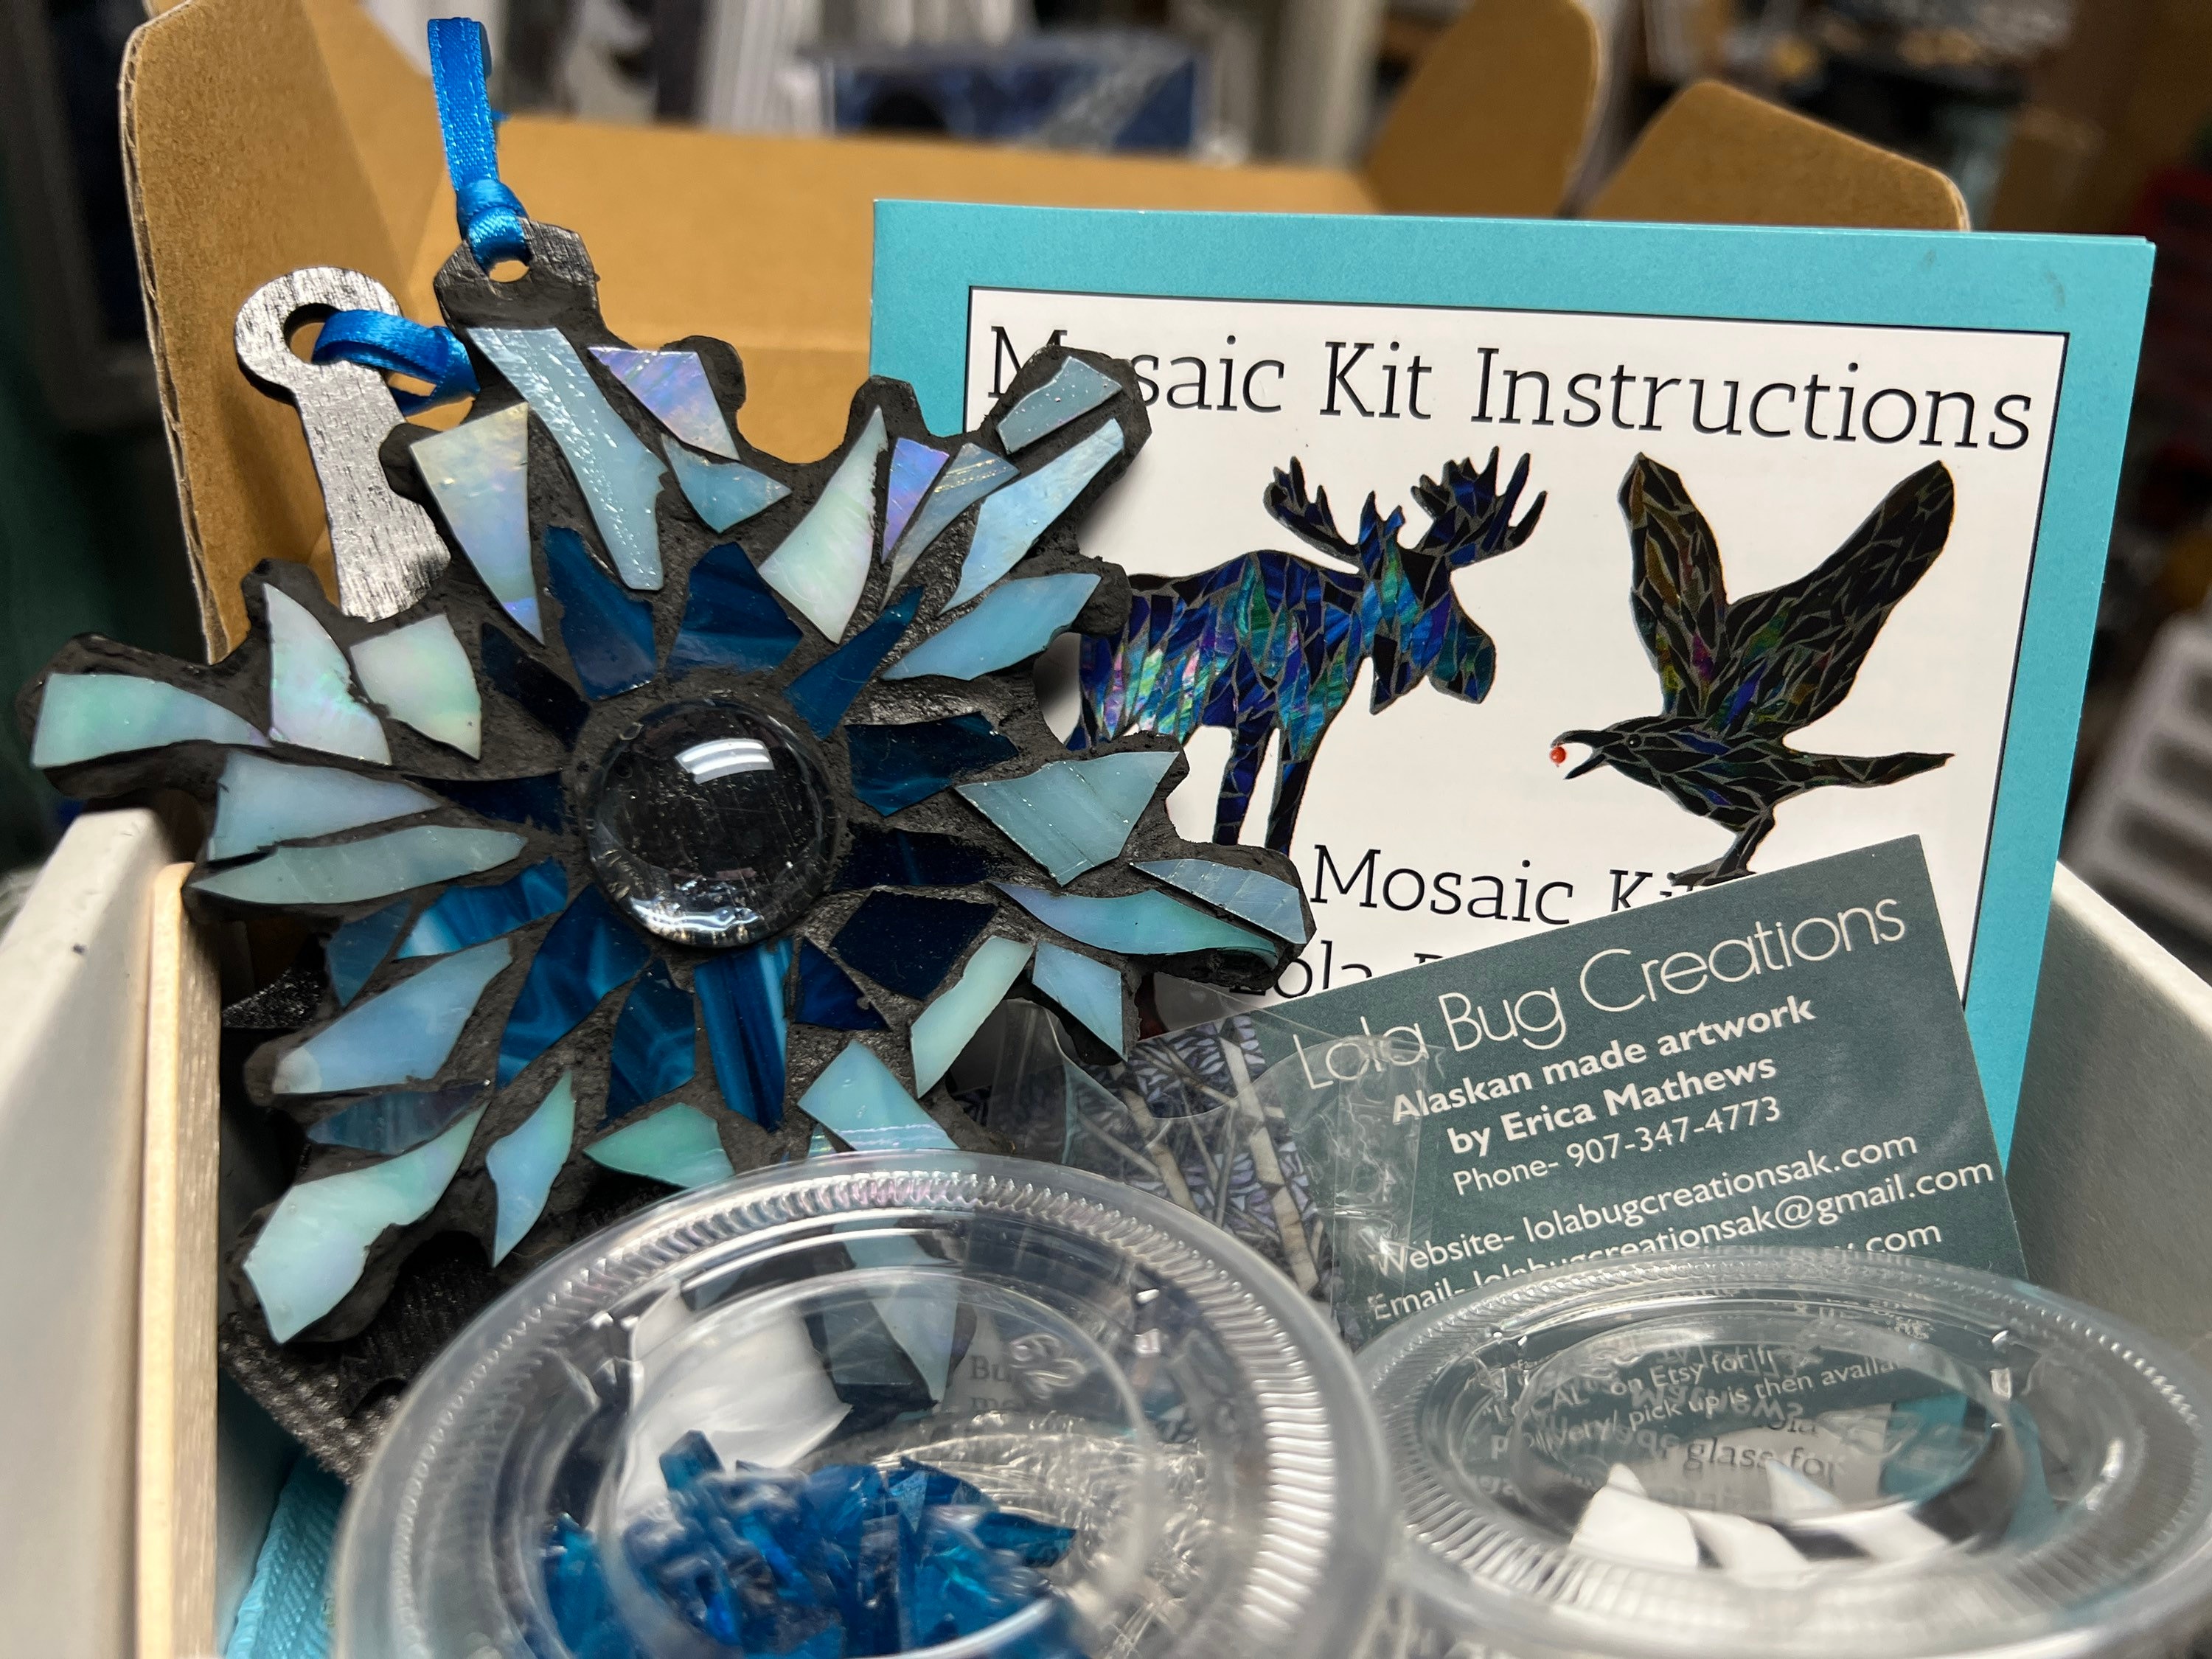 Snowflake Ornament Glass Mosaic Kit DIY 